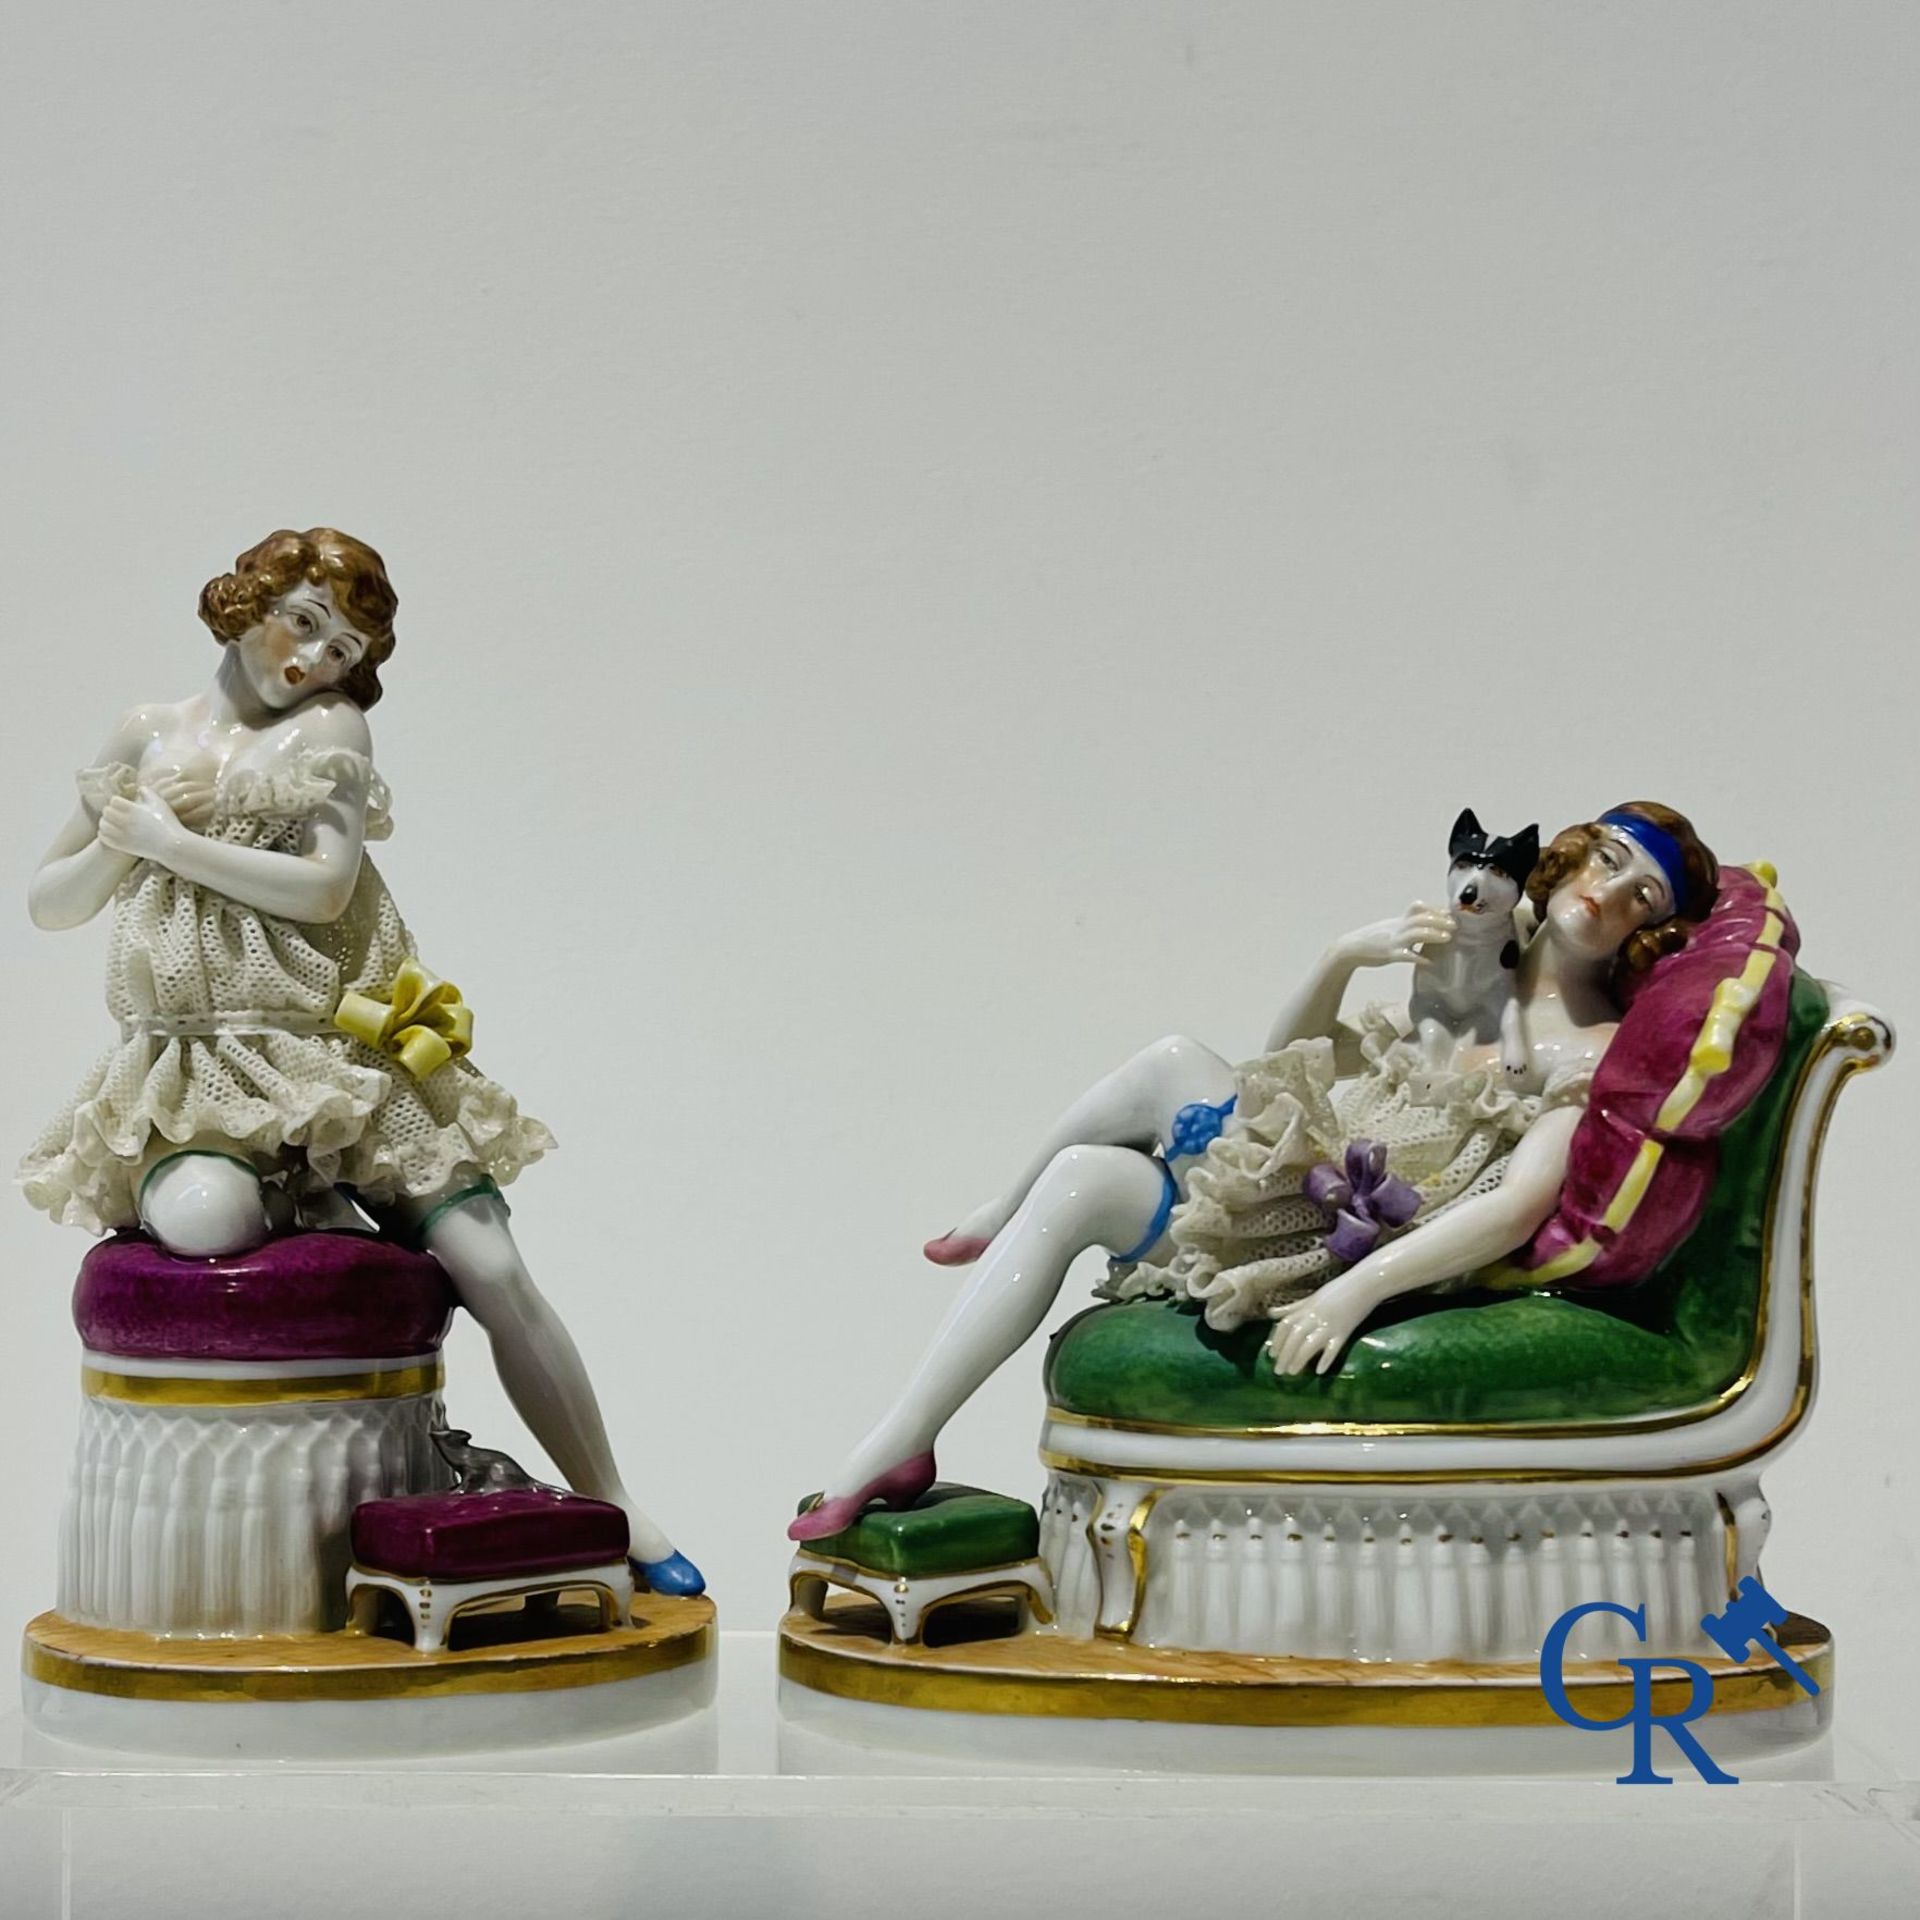 Porcelain: In the manner of Volkstedt Rudolstadt. 2 figurines in lace porcelain.